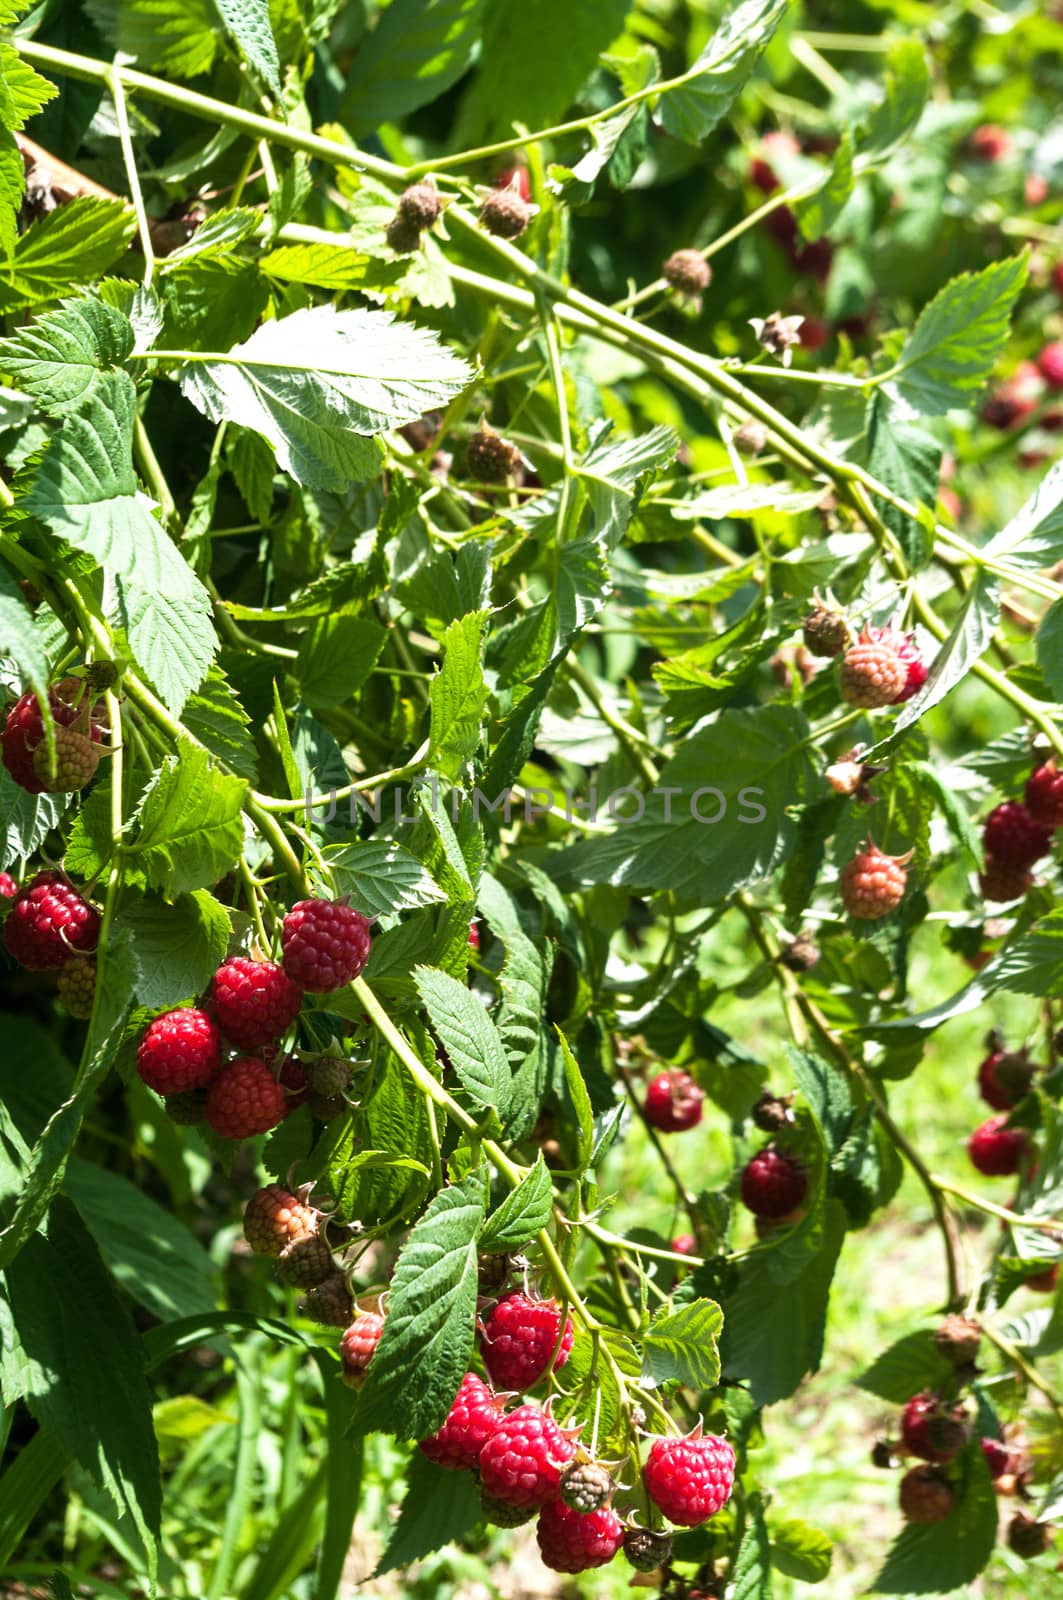 Raspberries on the vine by edcorey